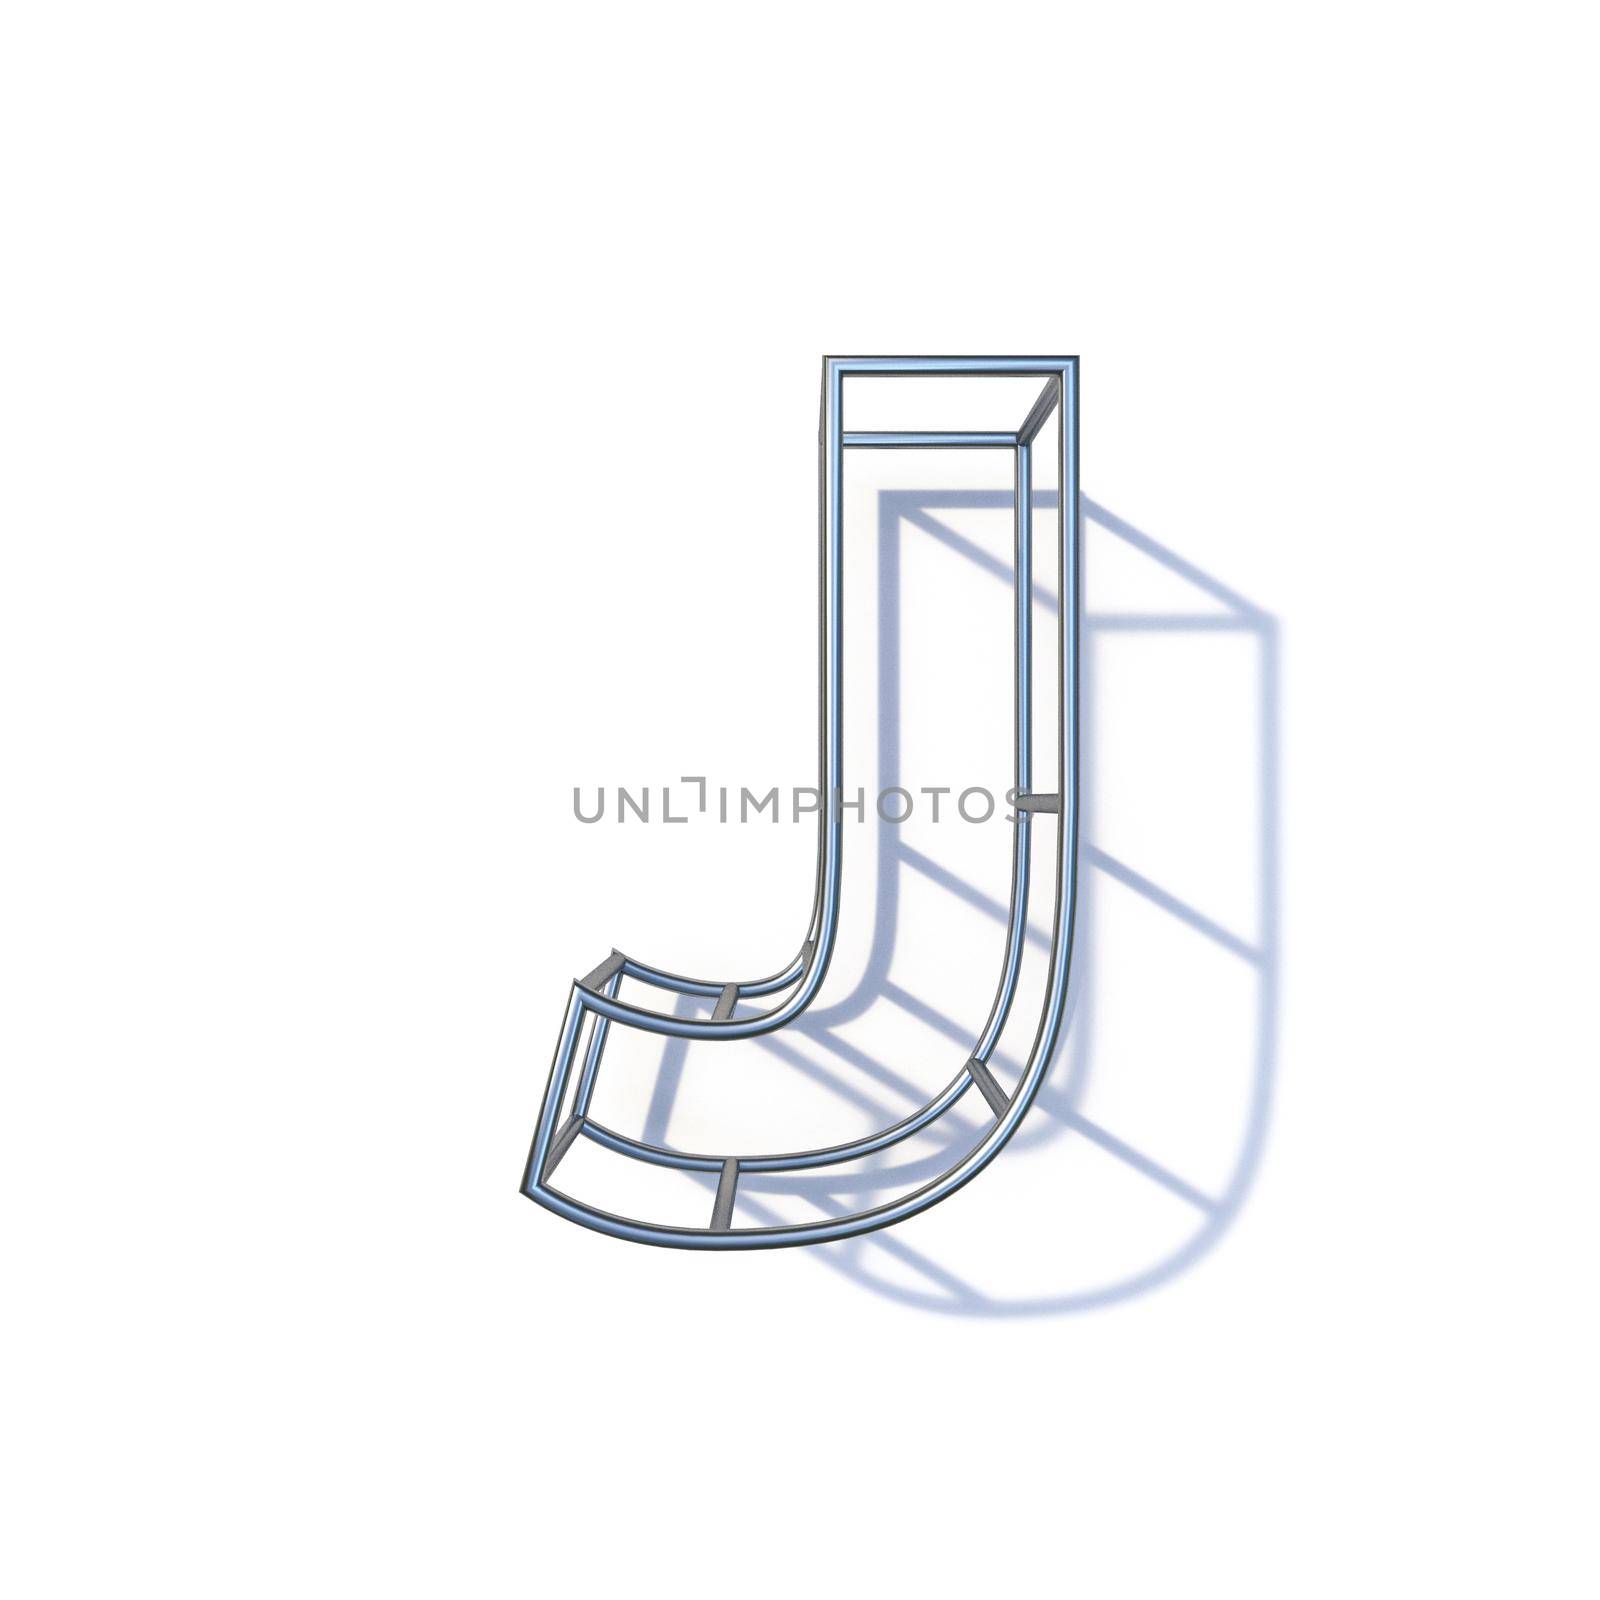 Steel wire frame font Letter J 3D render illustration isolated on white background